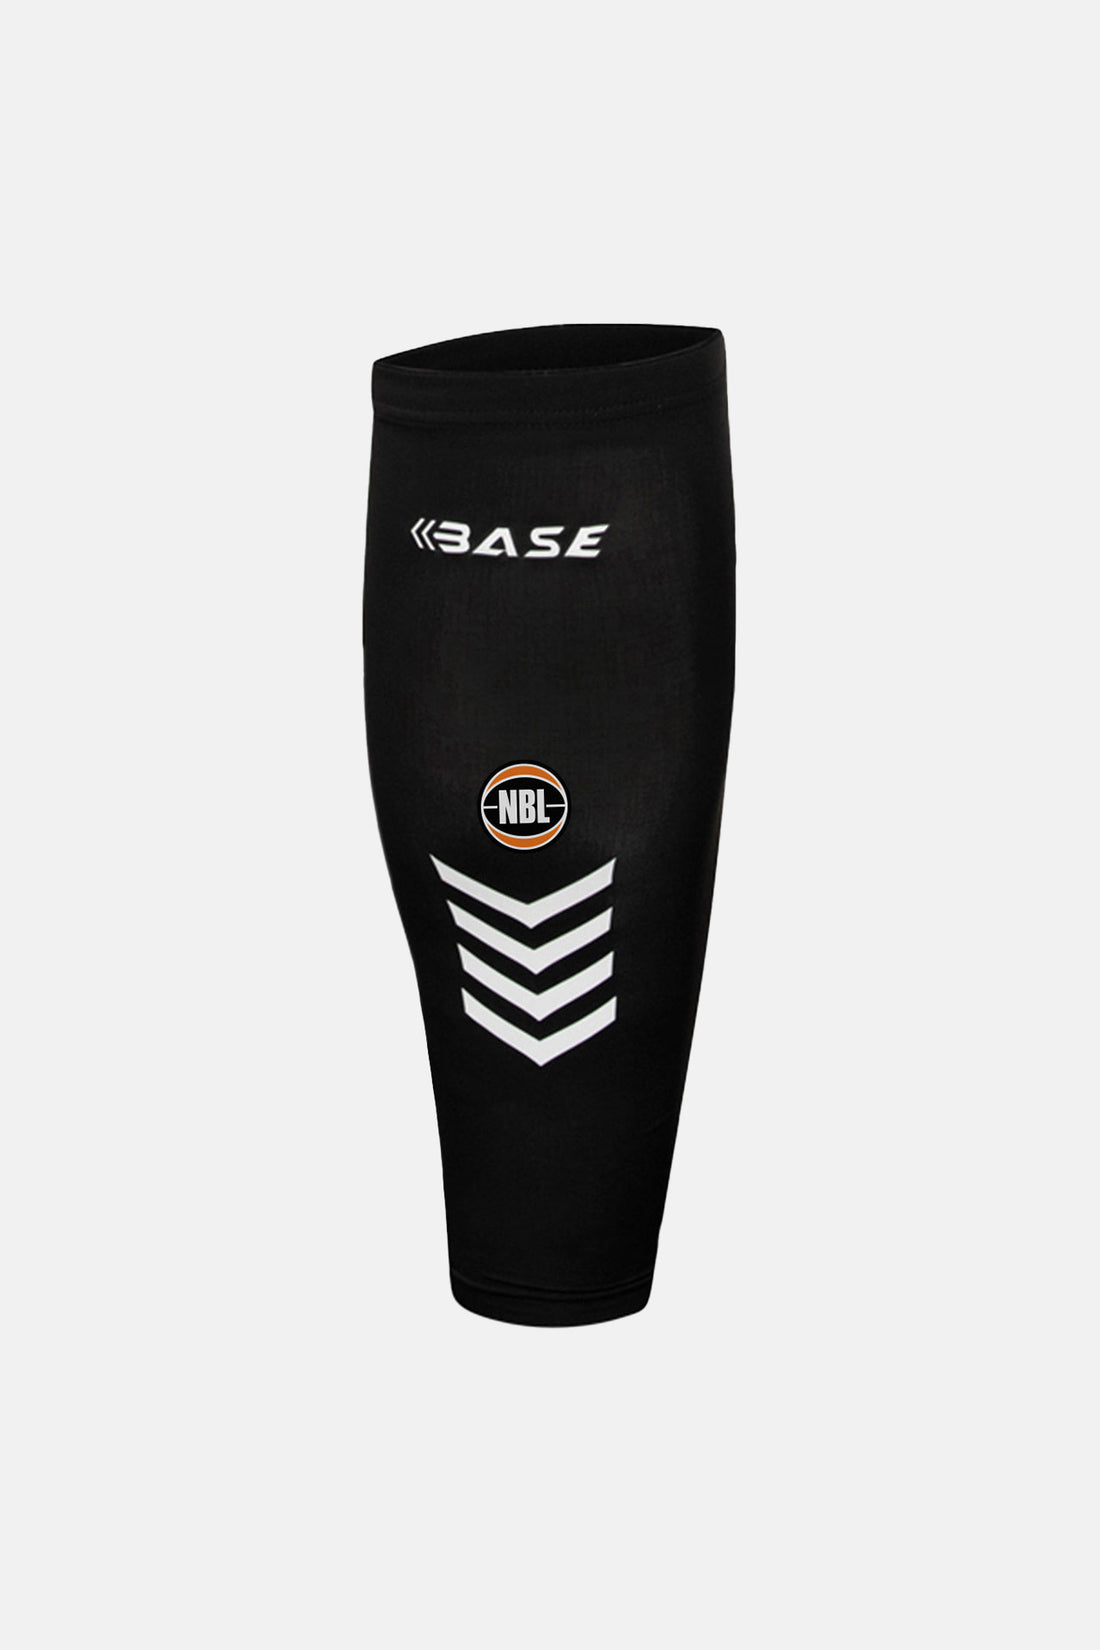 BASE + NBL Compression Calf Sleeve (Single) - Black